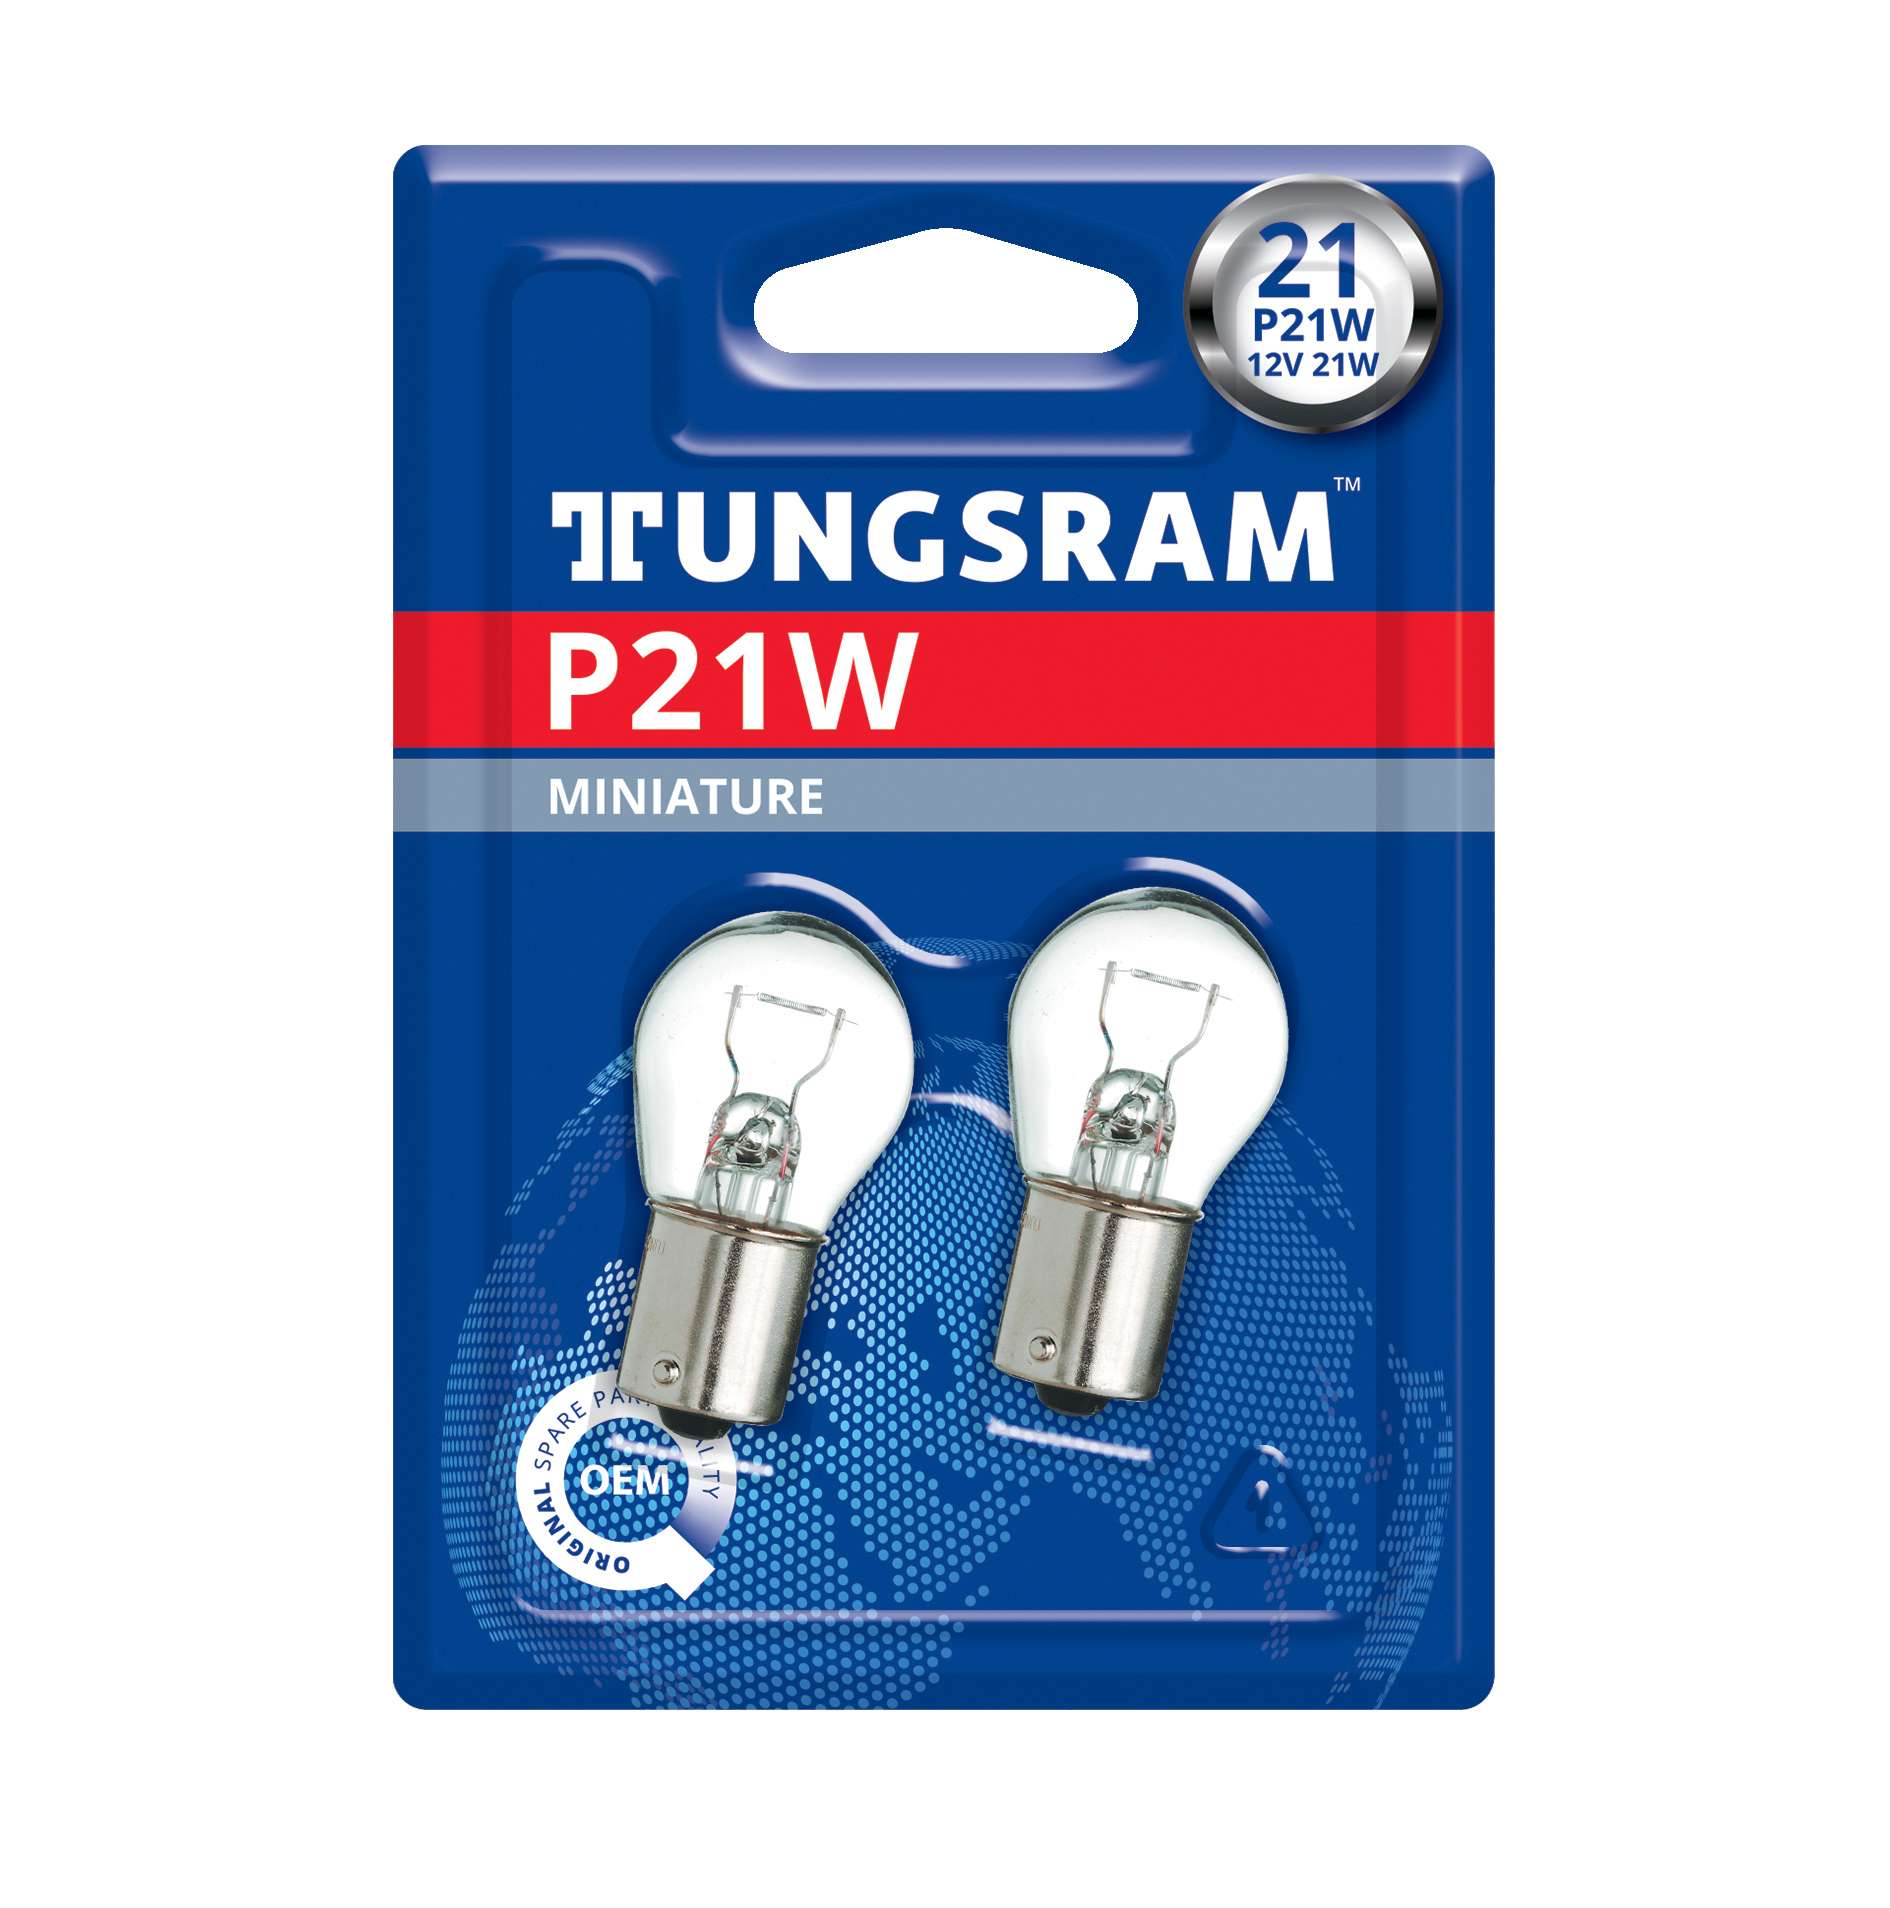 2x P21W Lamps 12V 21W BA15s 2St. Tungsram Blister Pack